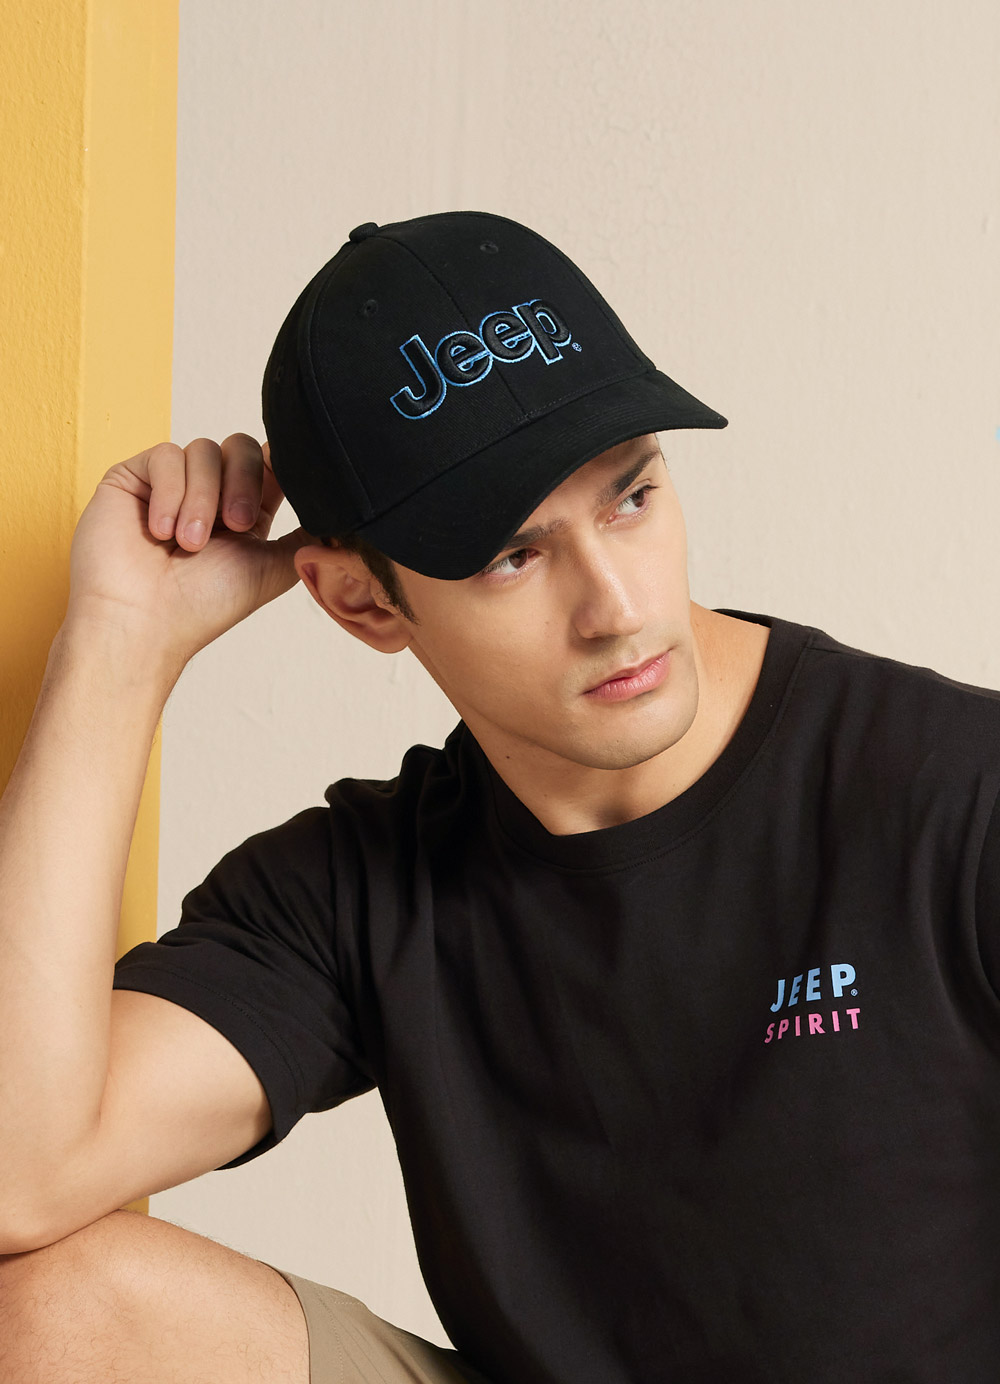 JEEP 品牌LOGO撞色刺繡棒球帽(黑色) 推薦